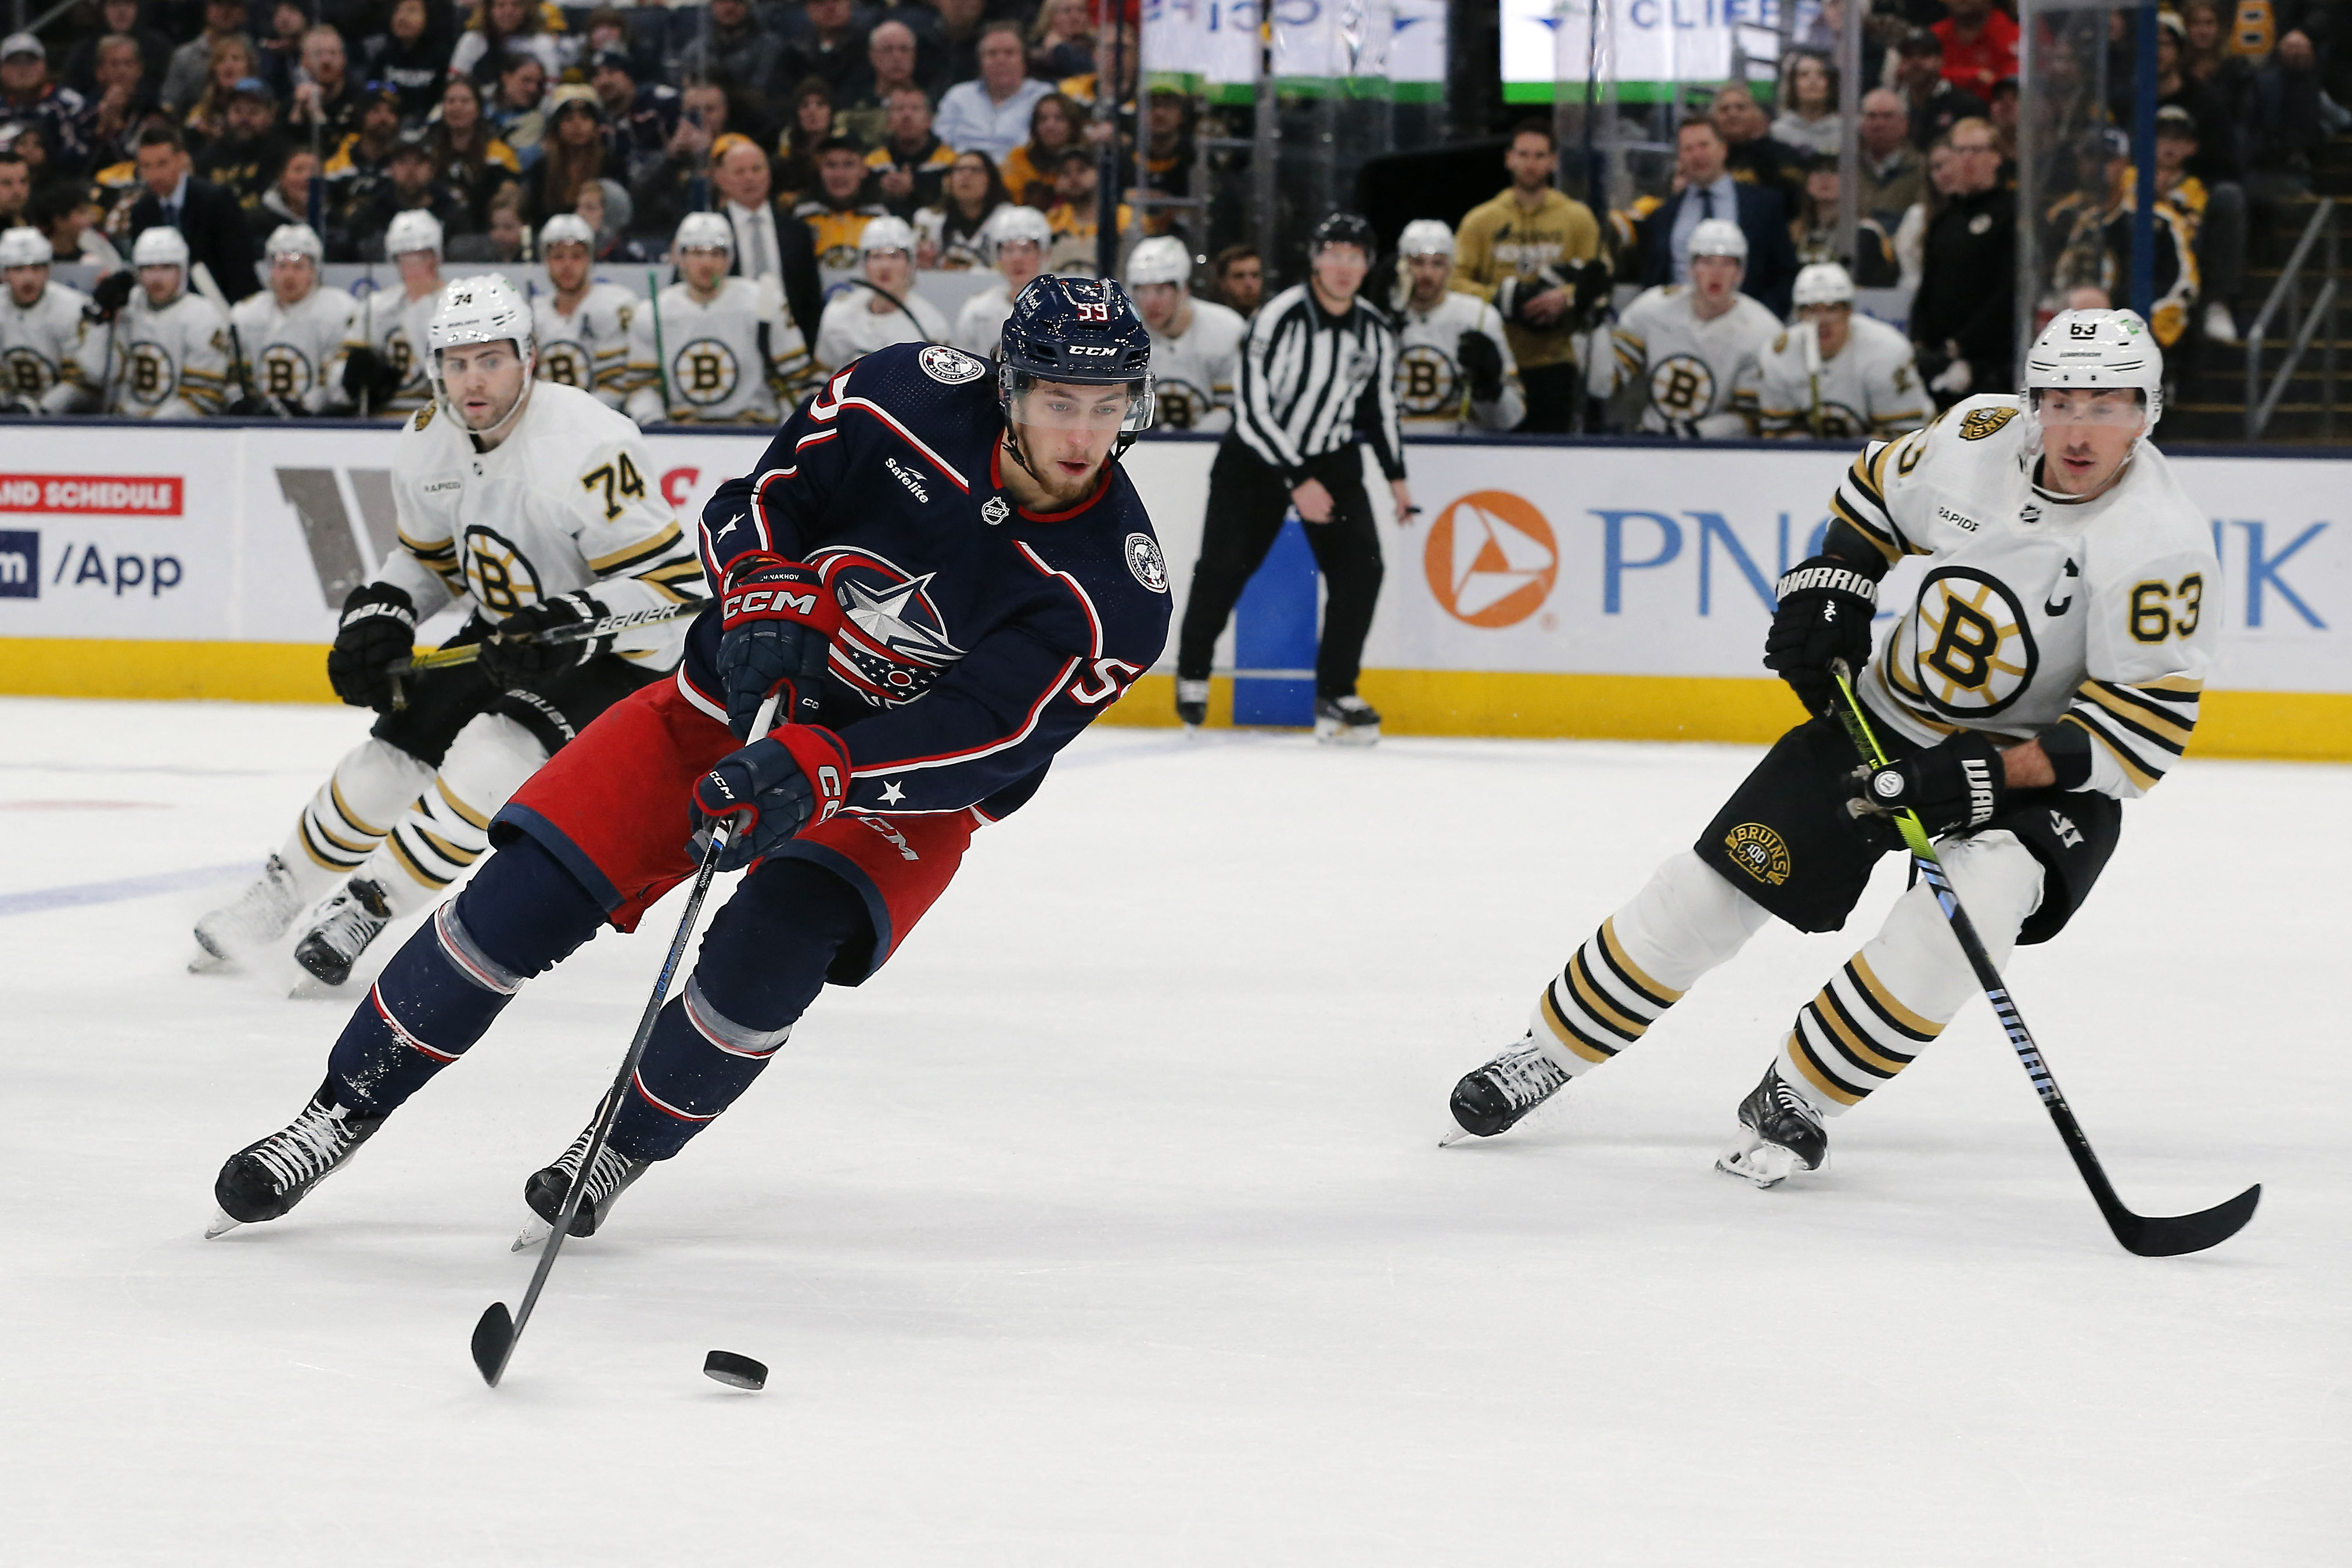 James van Riemsdyk's 3-point game sends Bruins past Jackets | Reuters